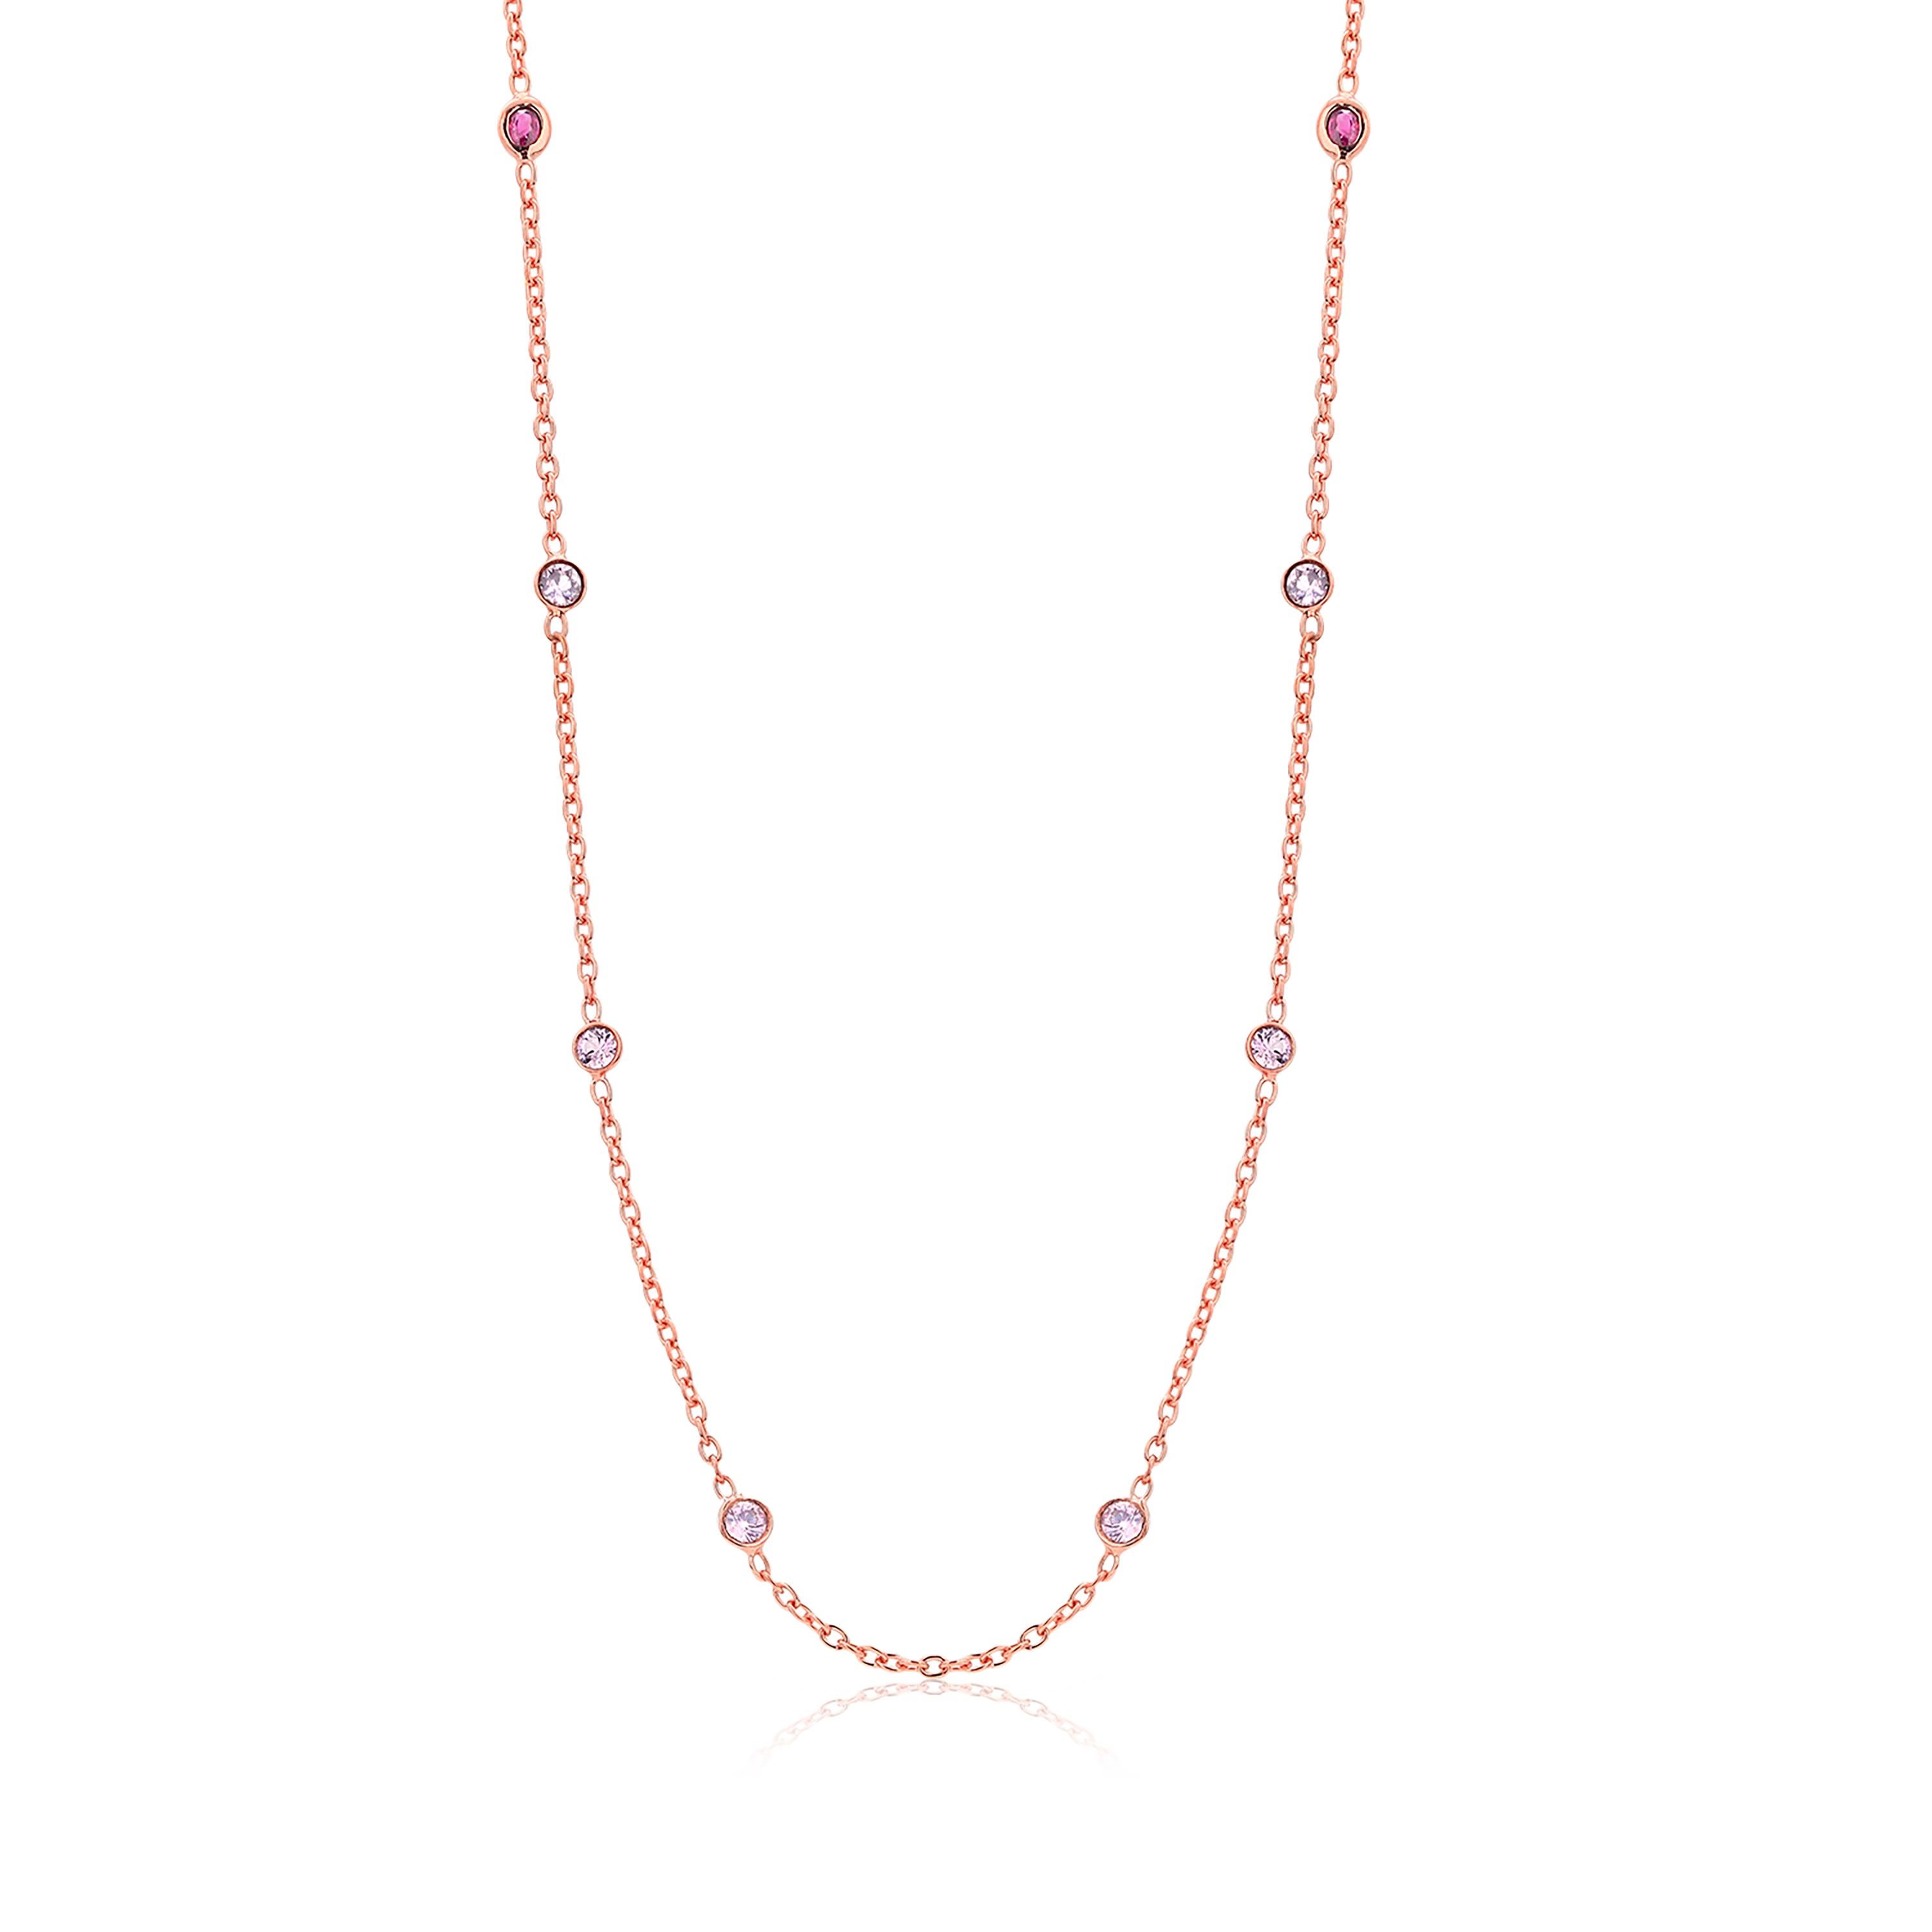 Sterling Silver 8 stations bezel set necklace pendant 
Rose gold plated
Necklace 16